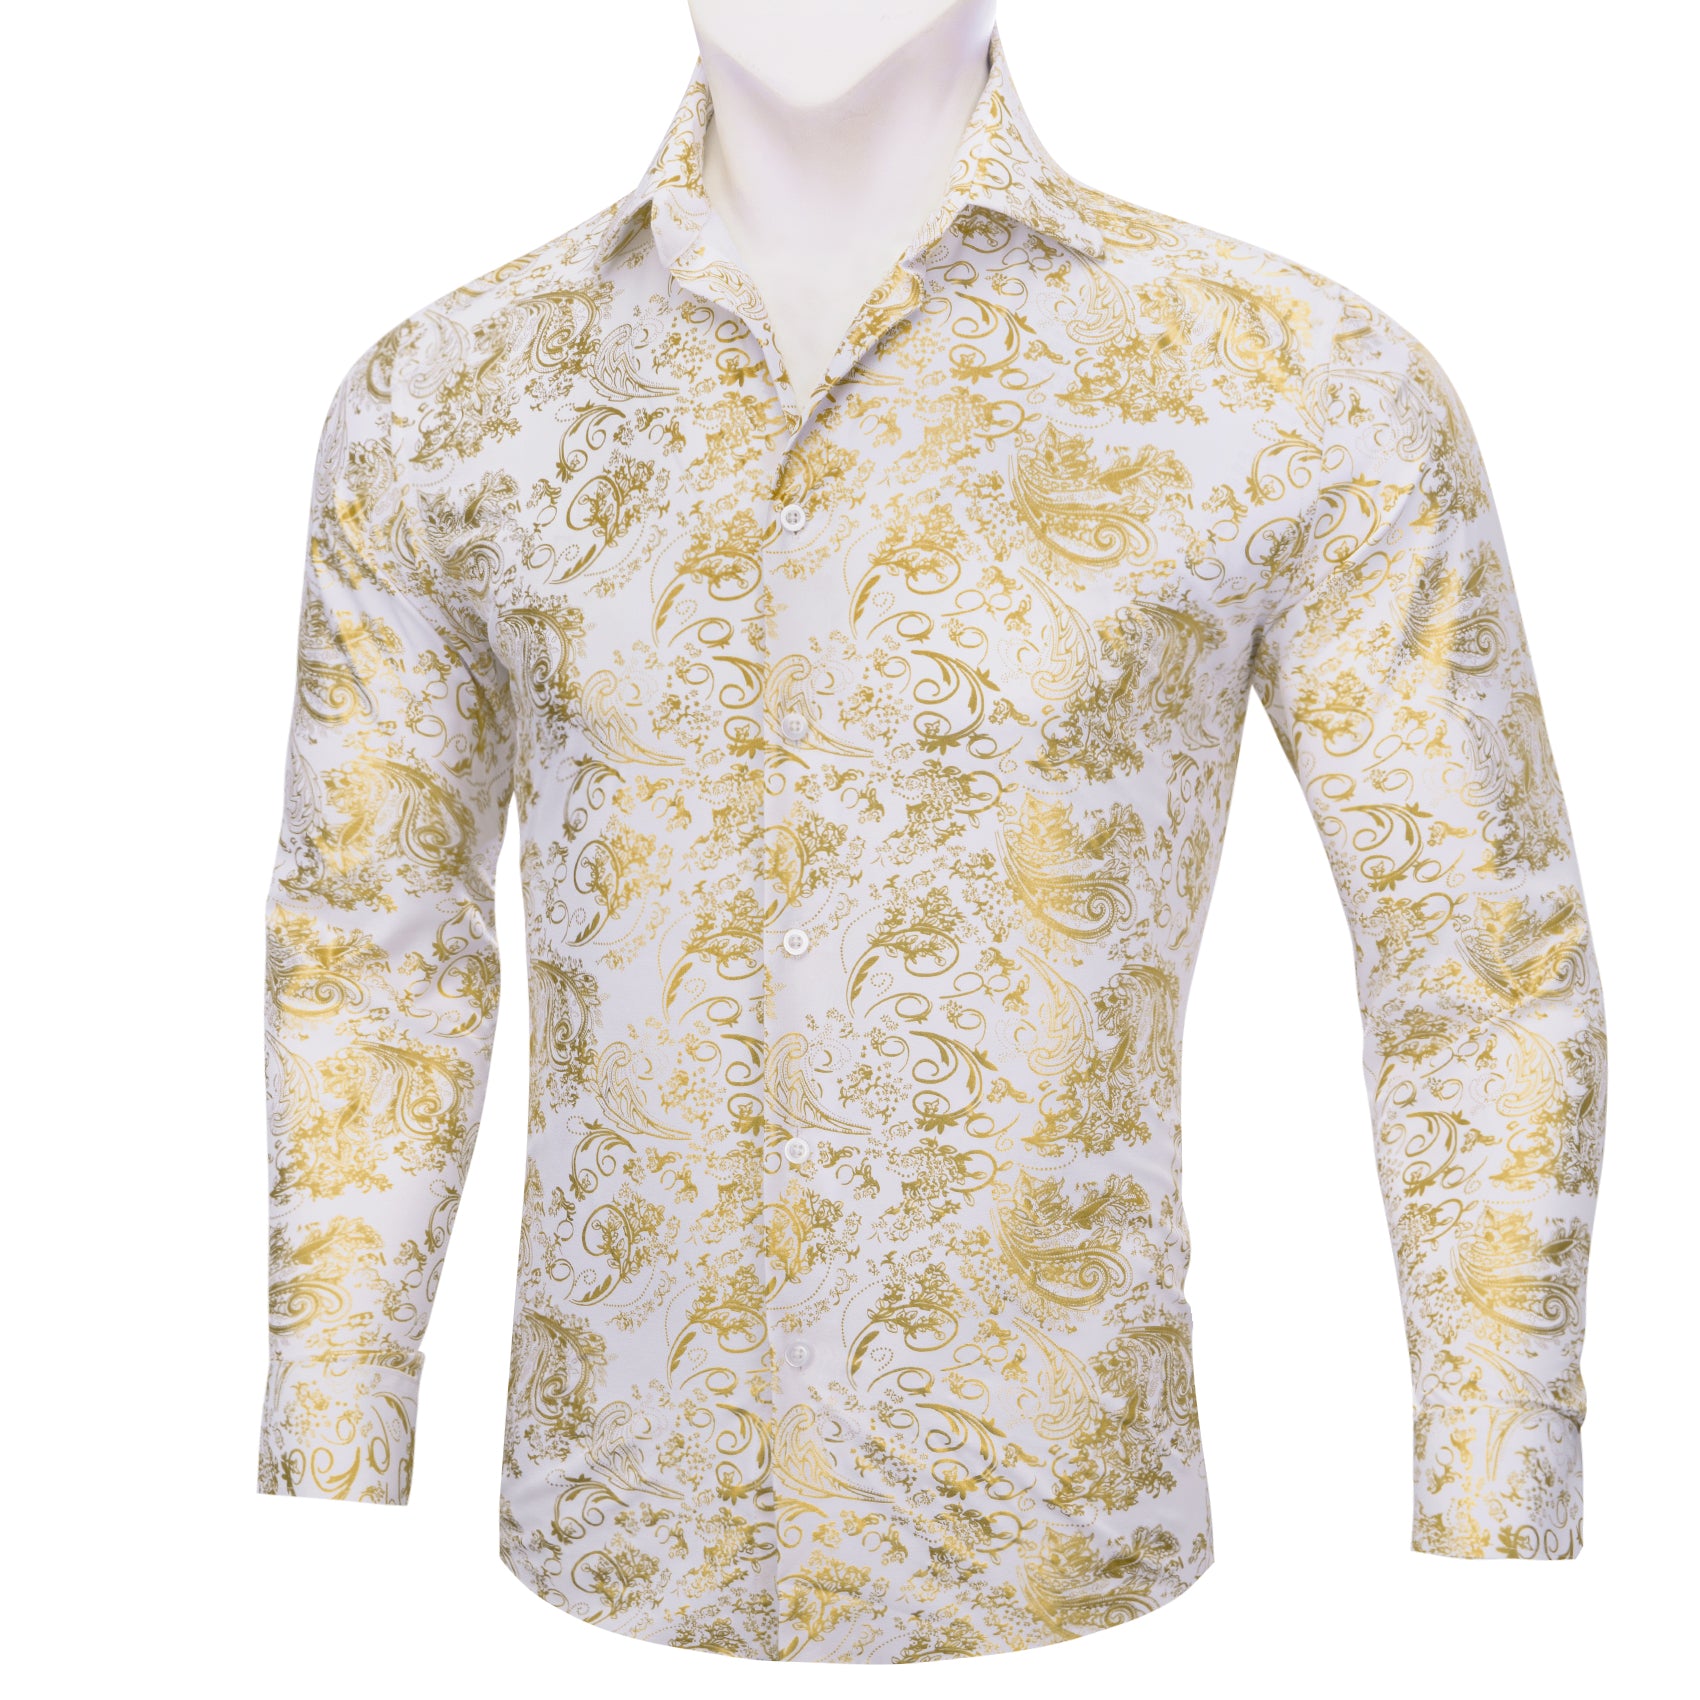 Barry.wang White Gold Paisley Silk Men's Shirt